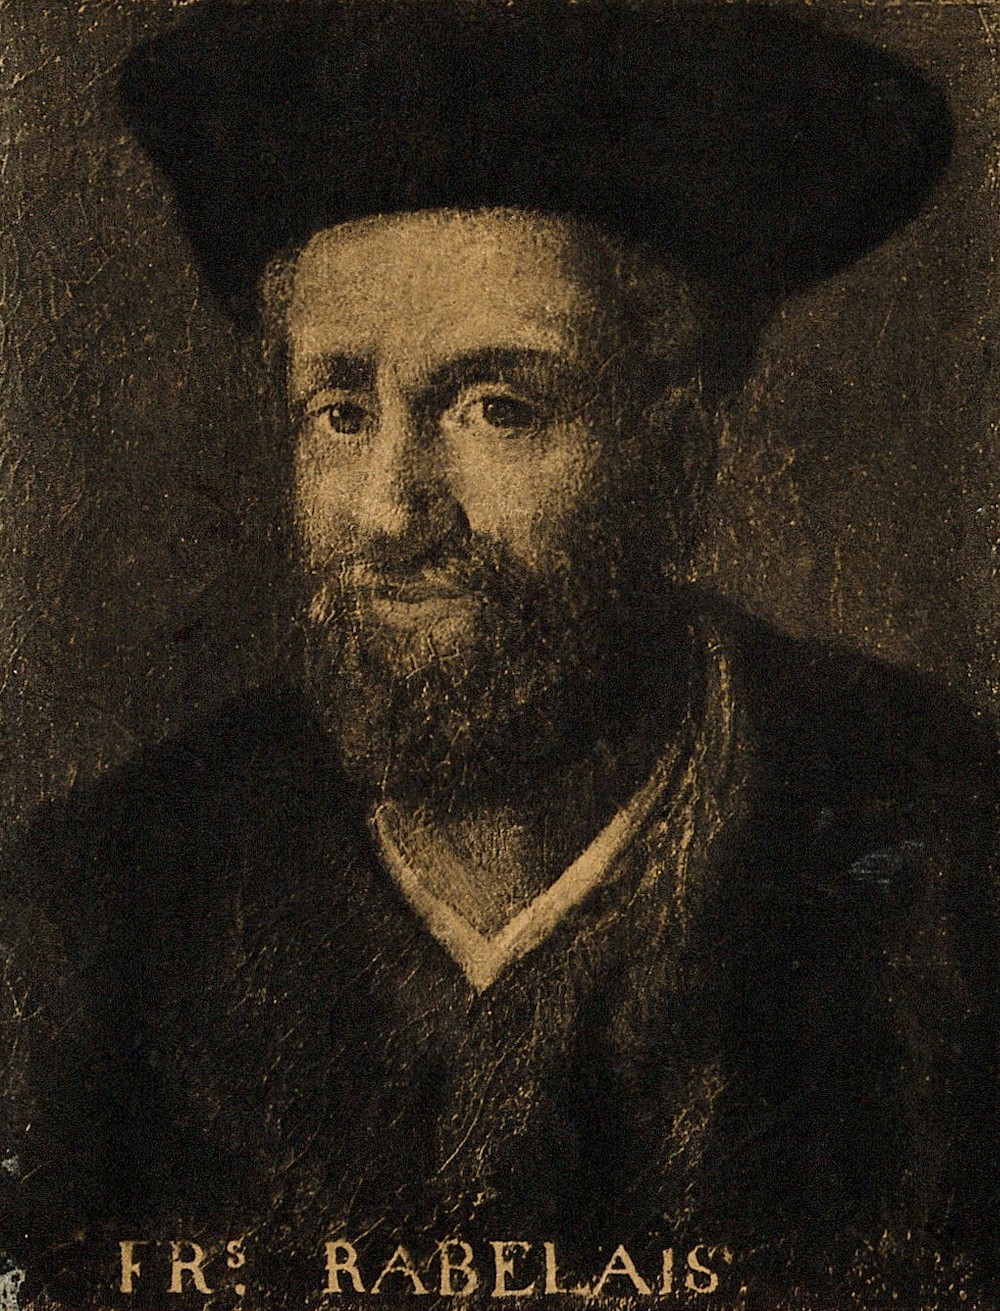 A photogravure of François Rabelais.